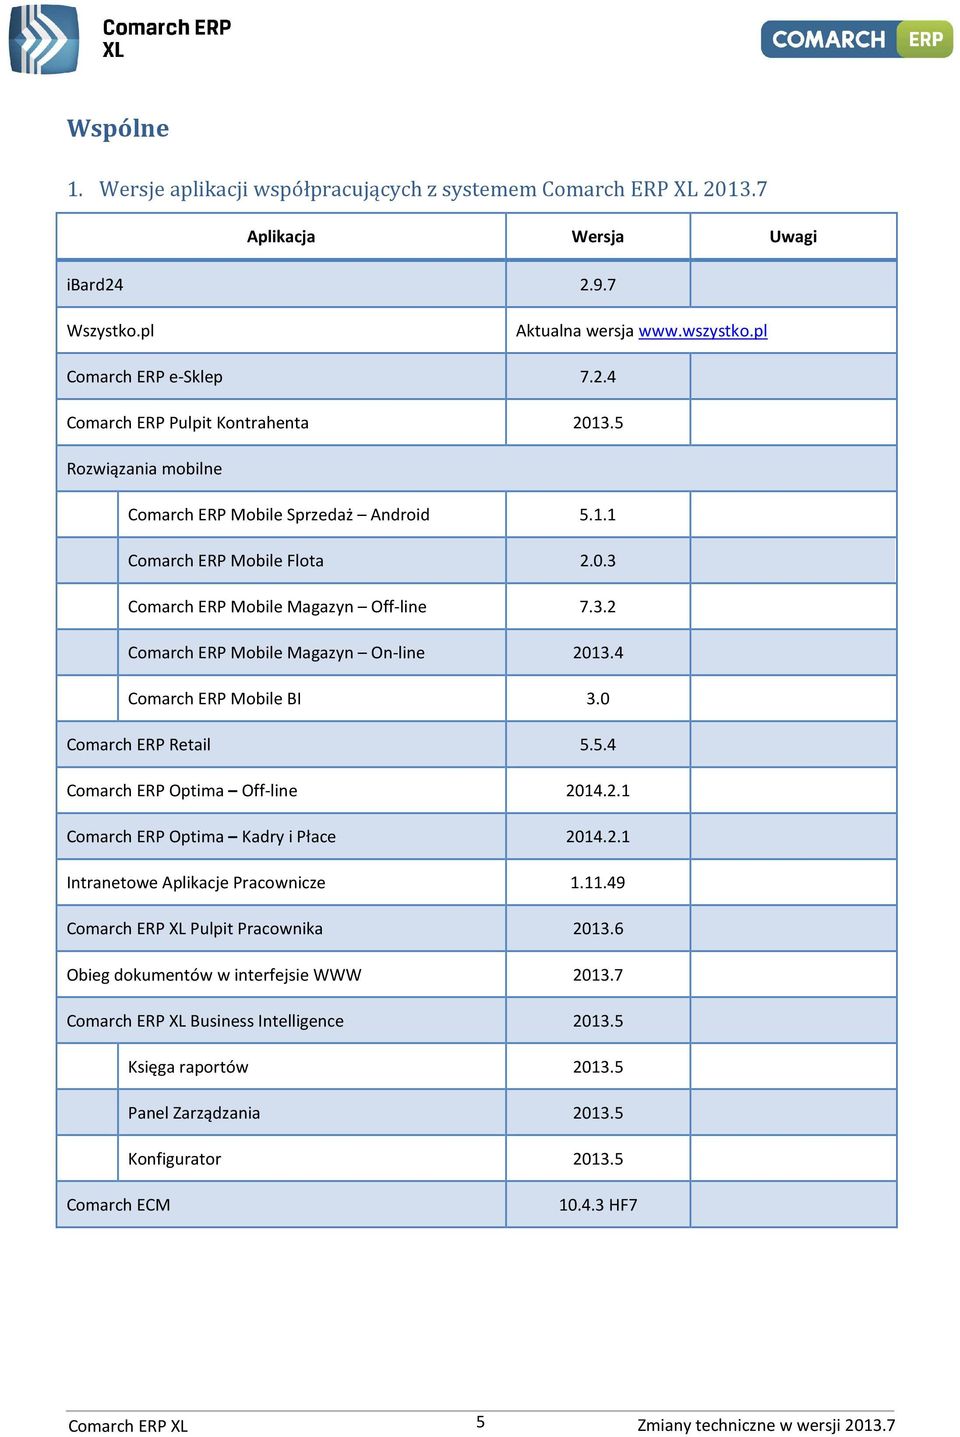 4 Comarch ERP Mobile BI 3.0 Comarch ERP Retail 5.5.4 Comarch ERP Optima Off-line 2014.2.1 Comarch ERP Optima Kadry i Płace 2014.2.1 Intranetowe Aplikacje Pracownicze 1.11.